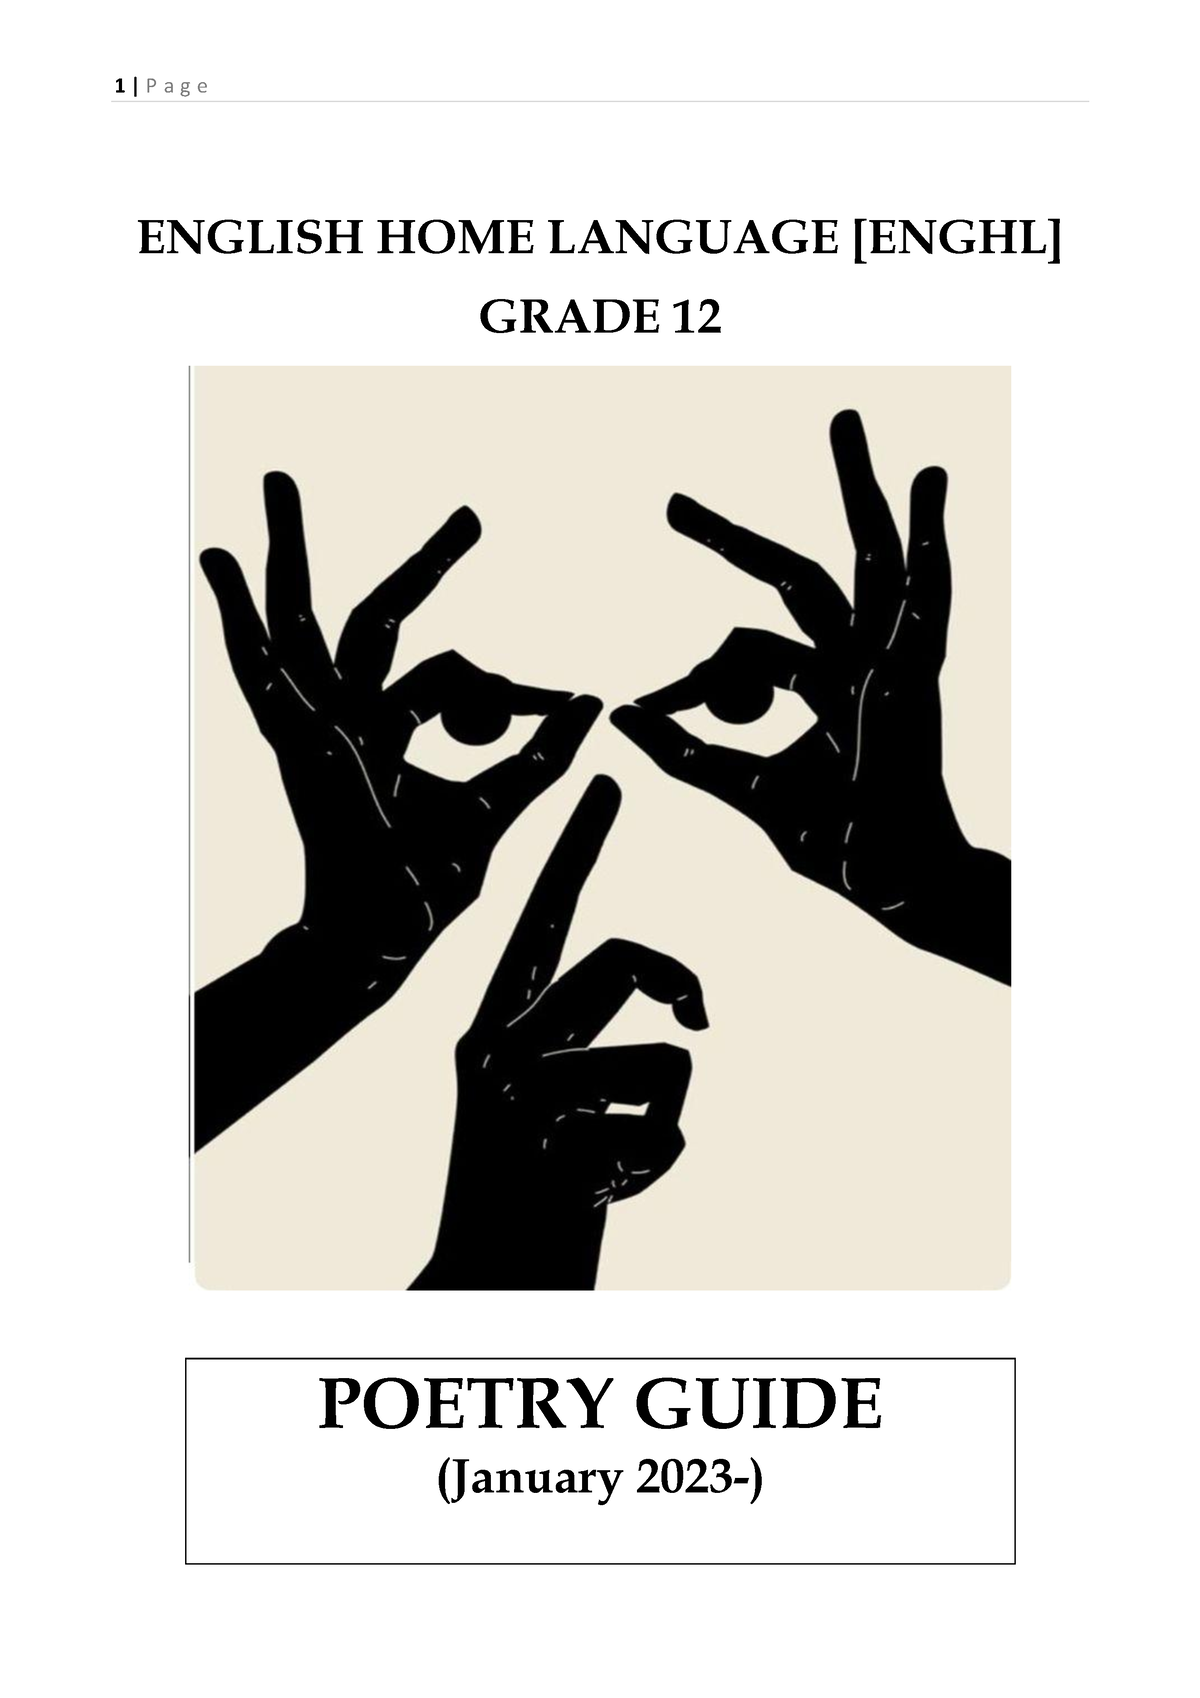 Grade 12 English Home Language Poems 2023 English Home Language Enghl Grade 12 Poetry Guide 8753